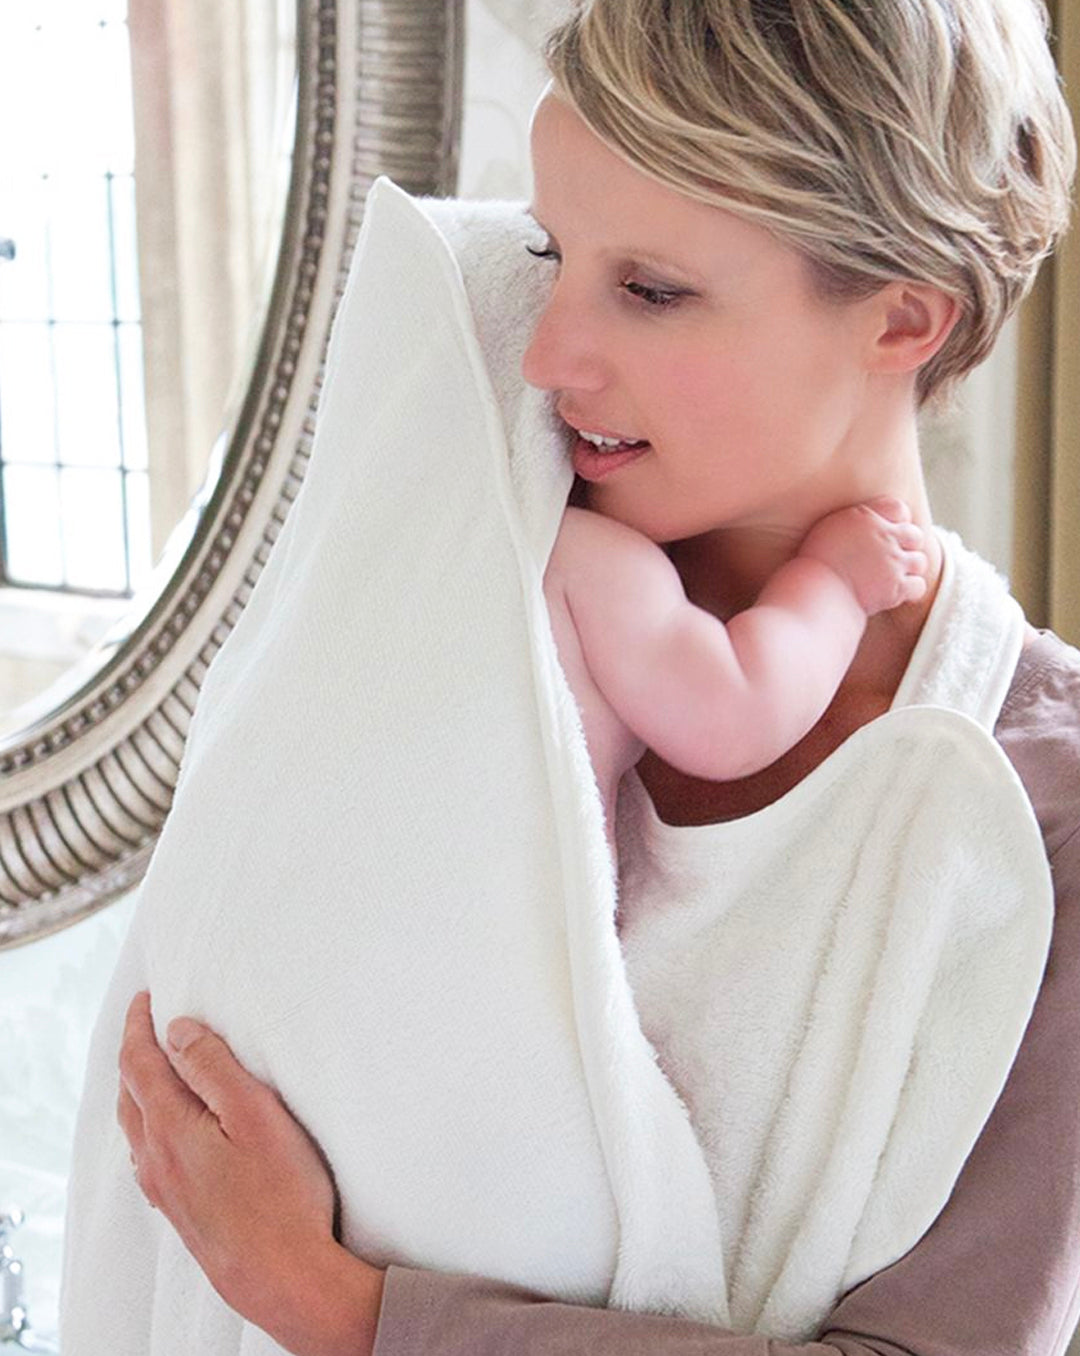 Cuddledry | hands free baby towel | white